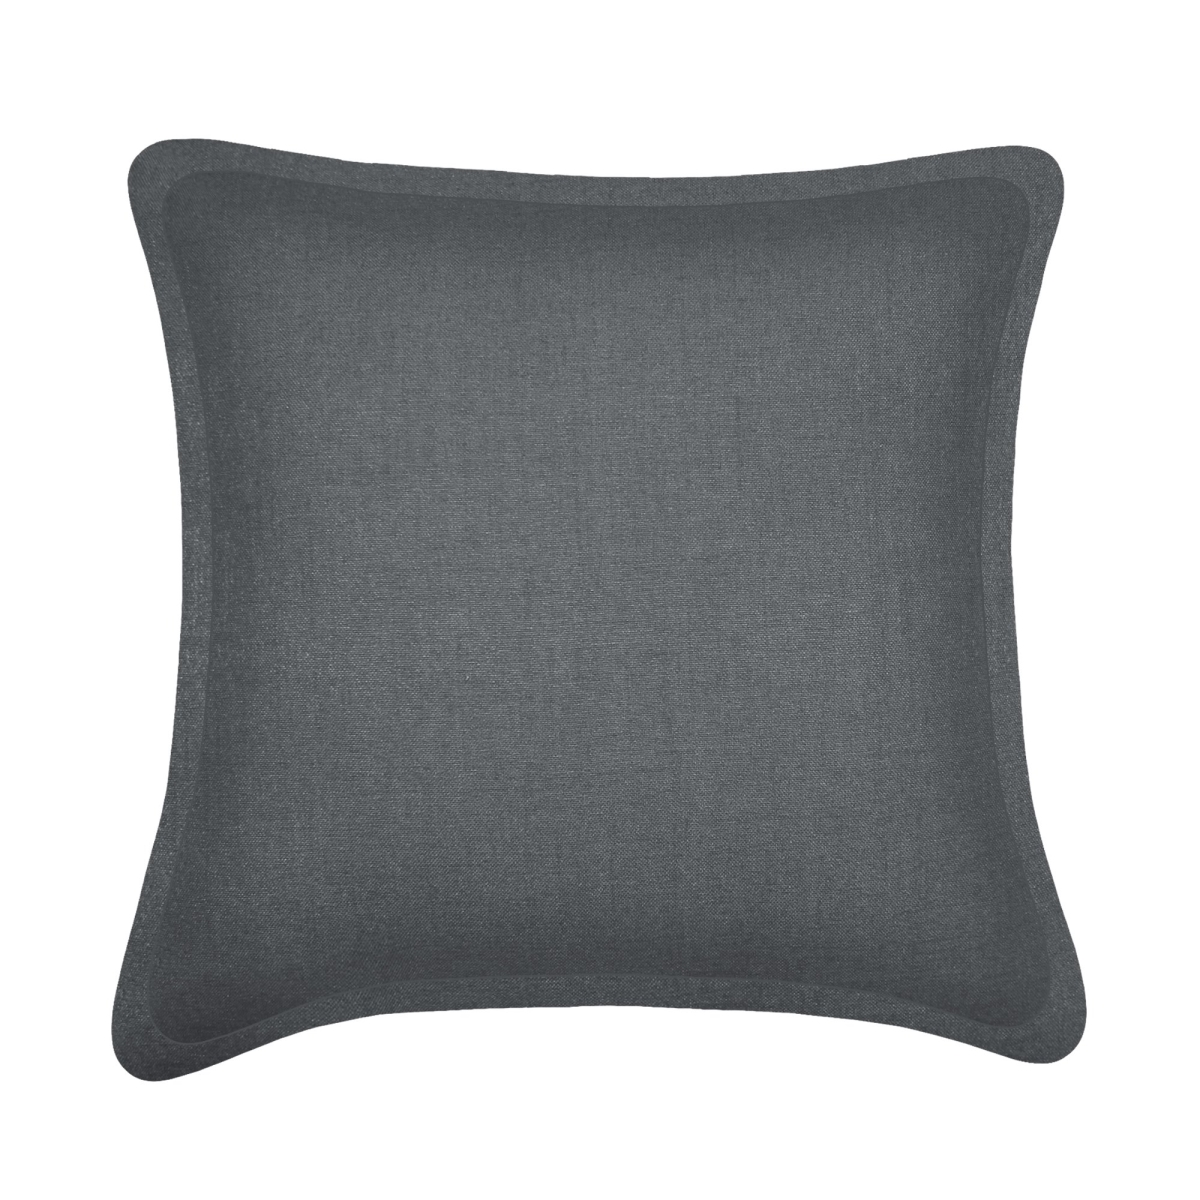 20 X 20 In. Tweed Cushion Cover - Grey